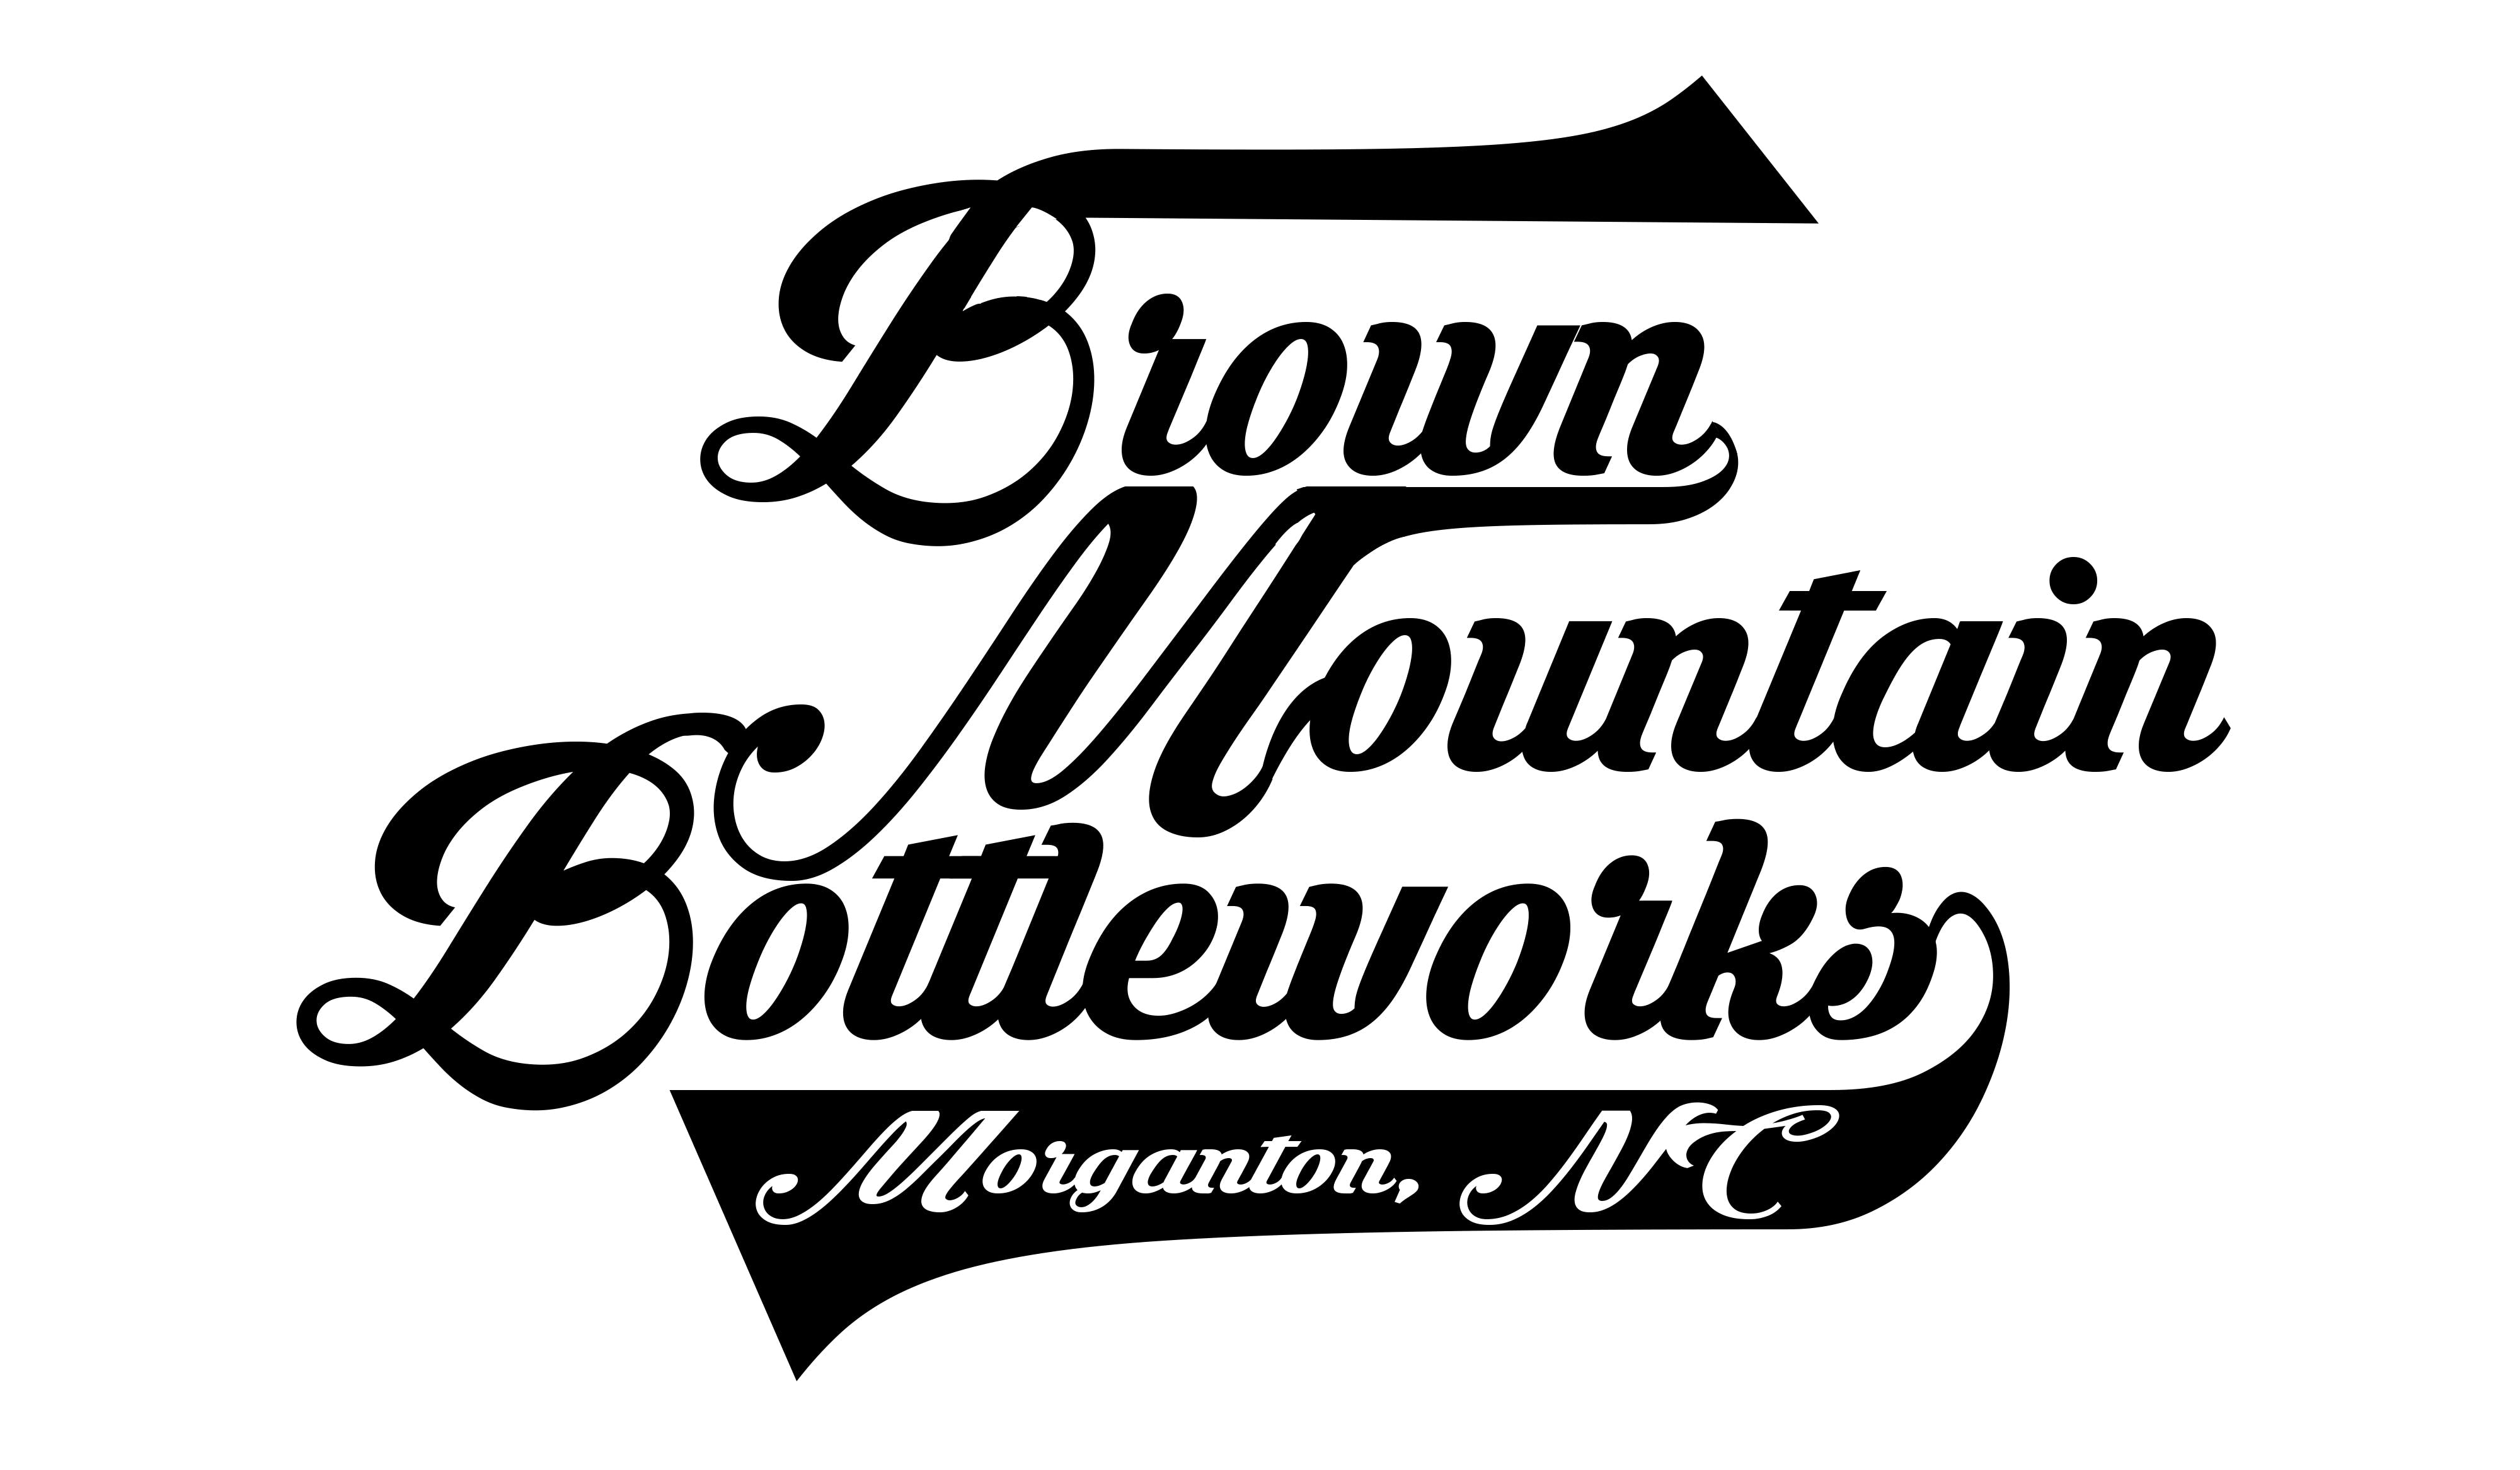 Brown Mountain Logo - OFFERINGS. Brown Mountain Bottleworks